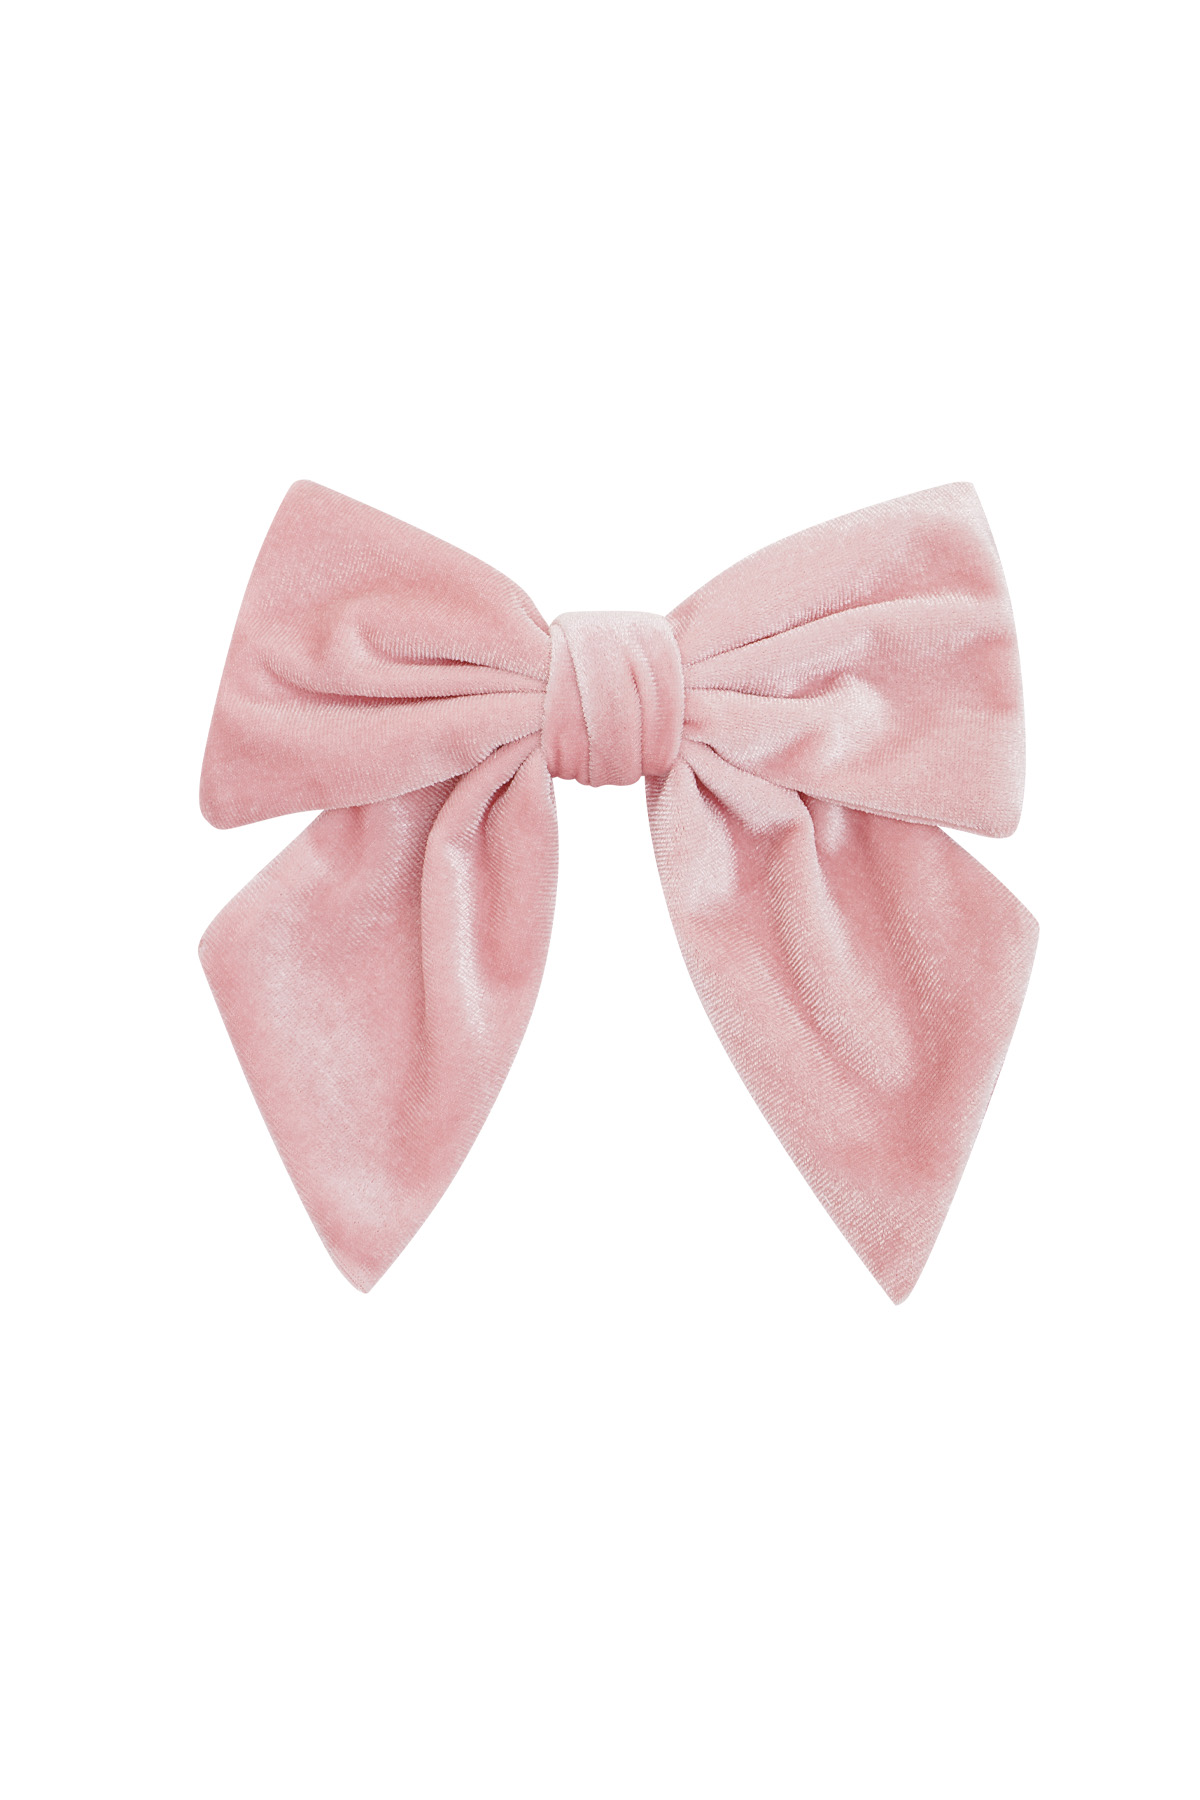 Short cute bow - pink 